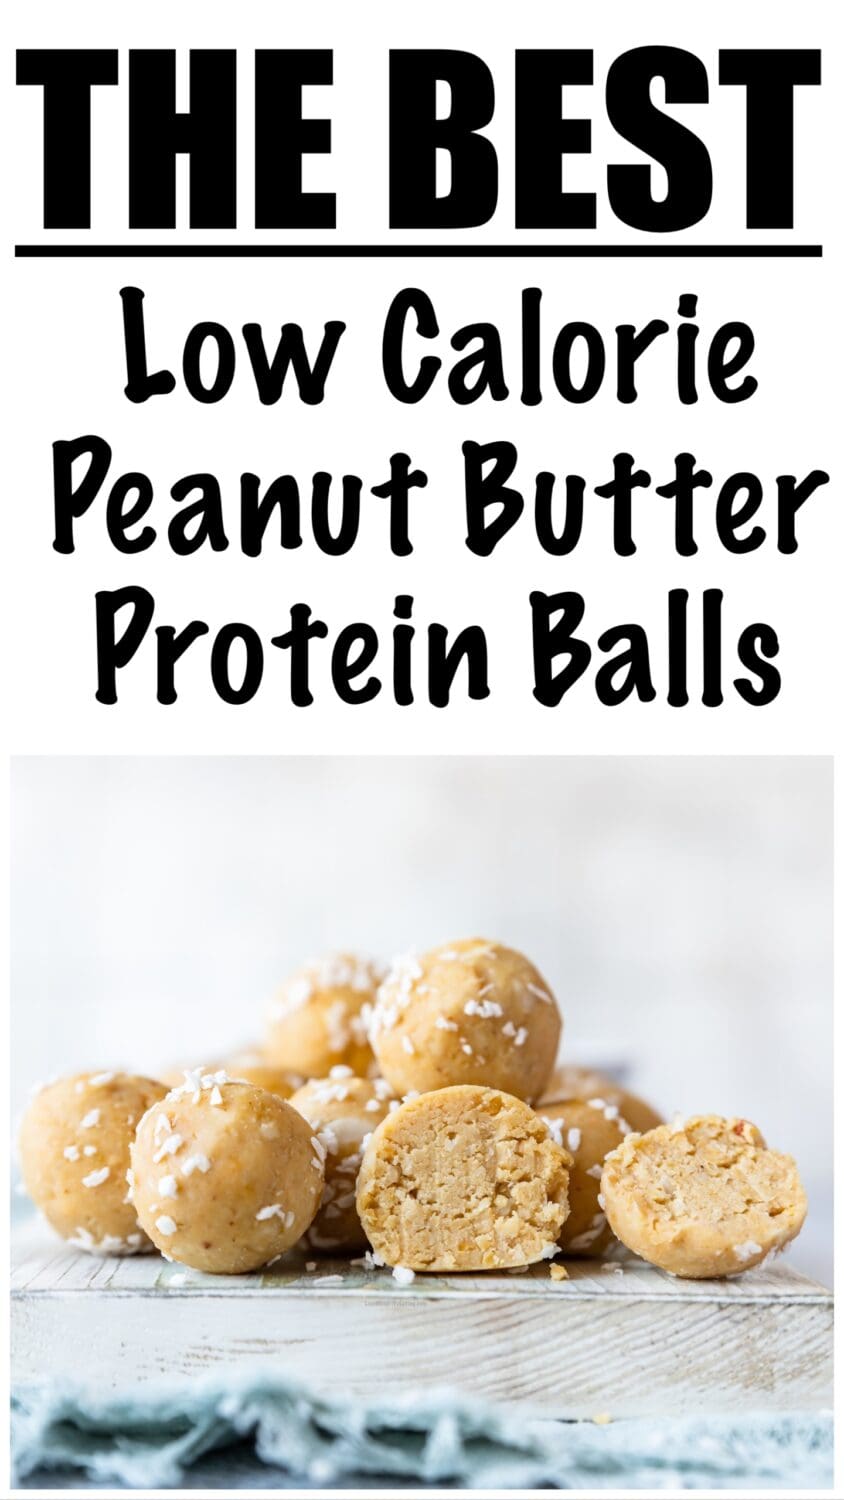 Low Calorie Peanut Butter Protein Balls Recipe